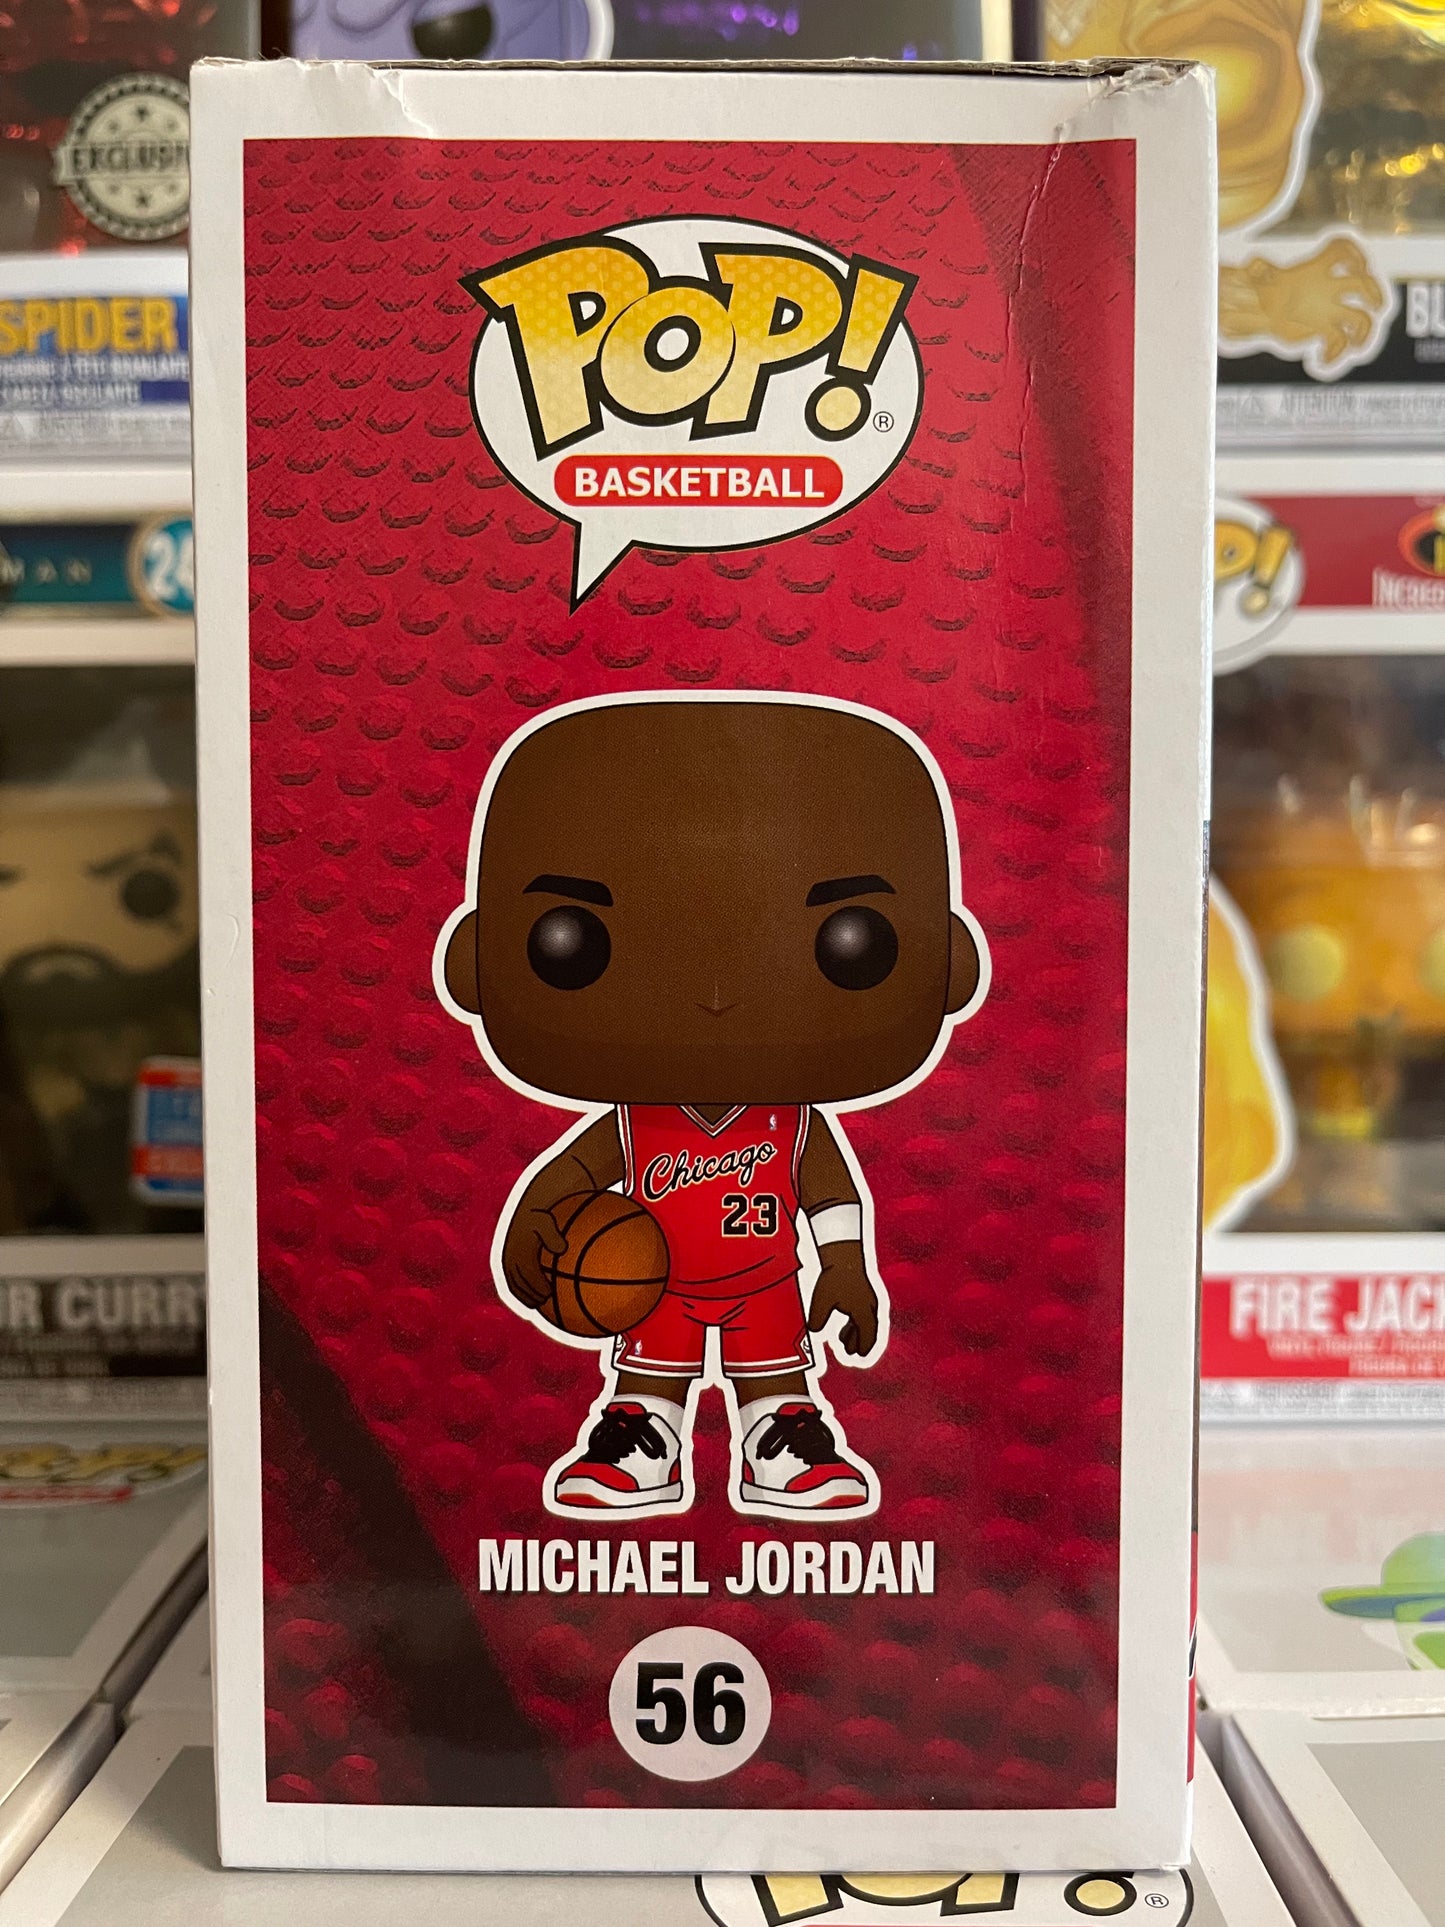 Pop Basketball - Michael Jordan (56) Vaulted